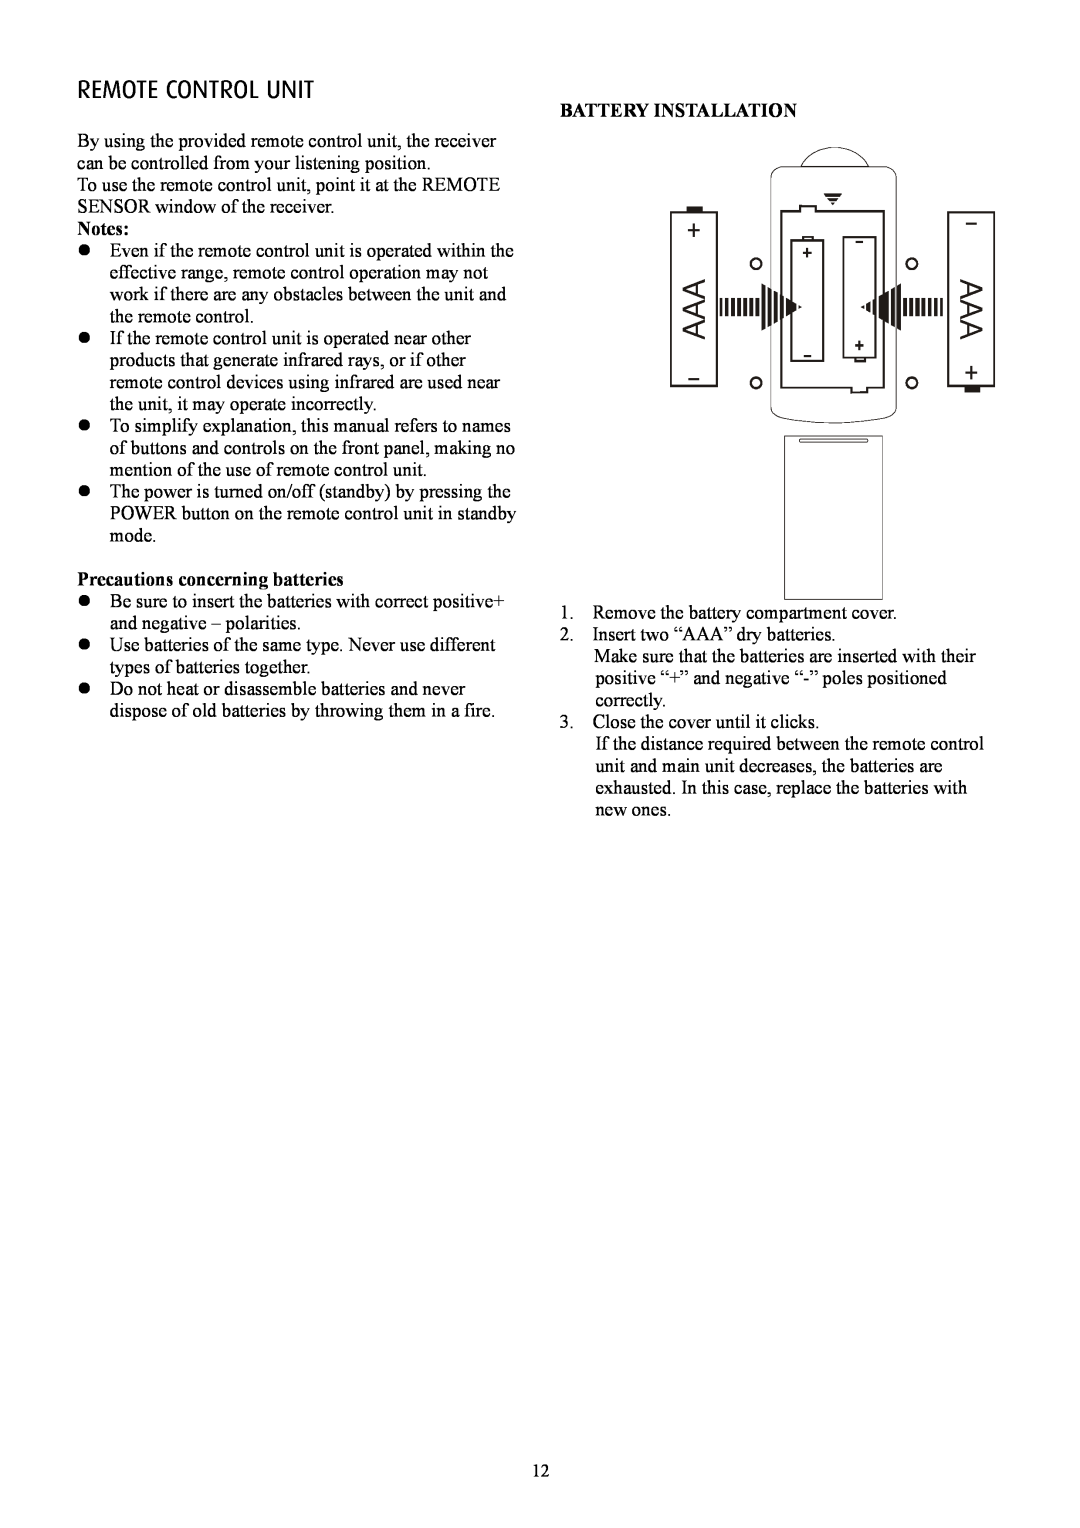 Eltax AVR-900 instruction manual Remote Control Unit, Precautions concerning batteries, Battery Installation 